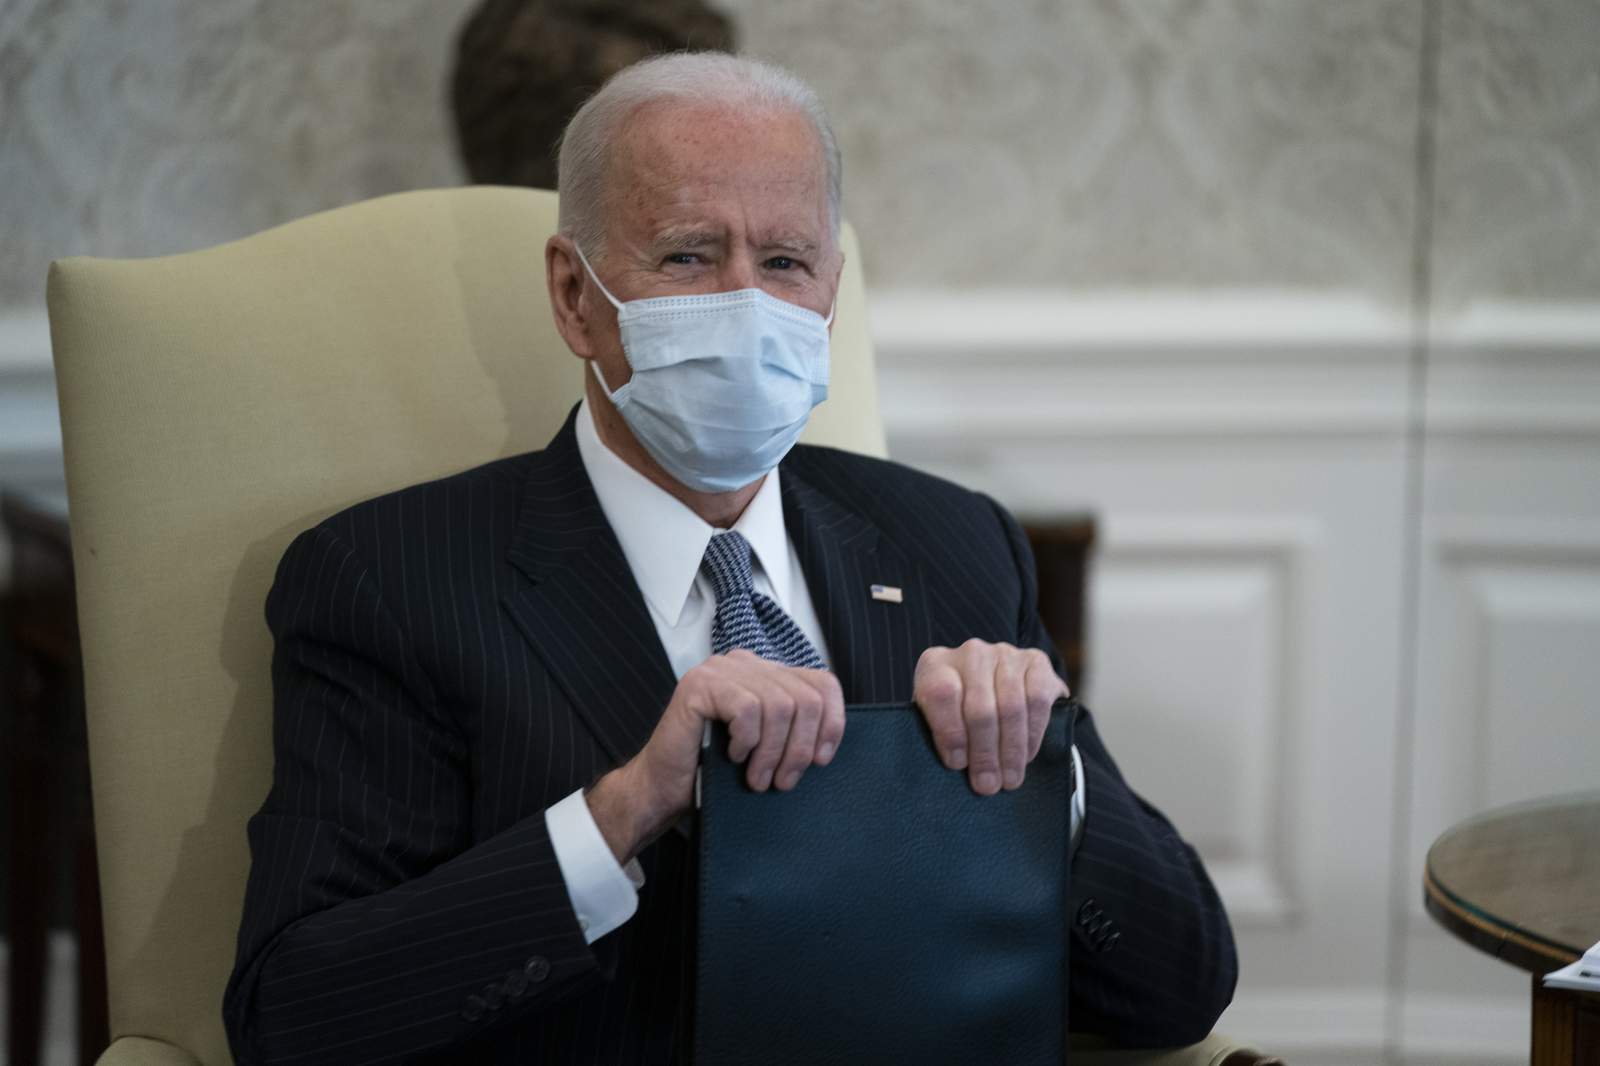 Biden shows flexibility but tells House to ‘go big’ on aid